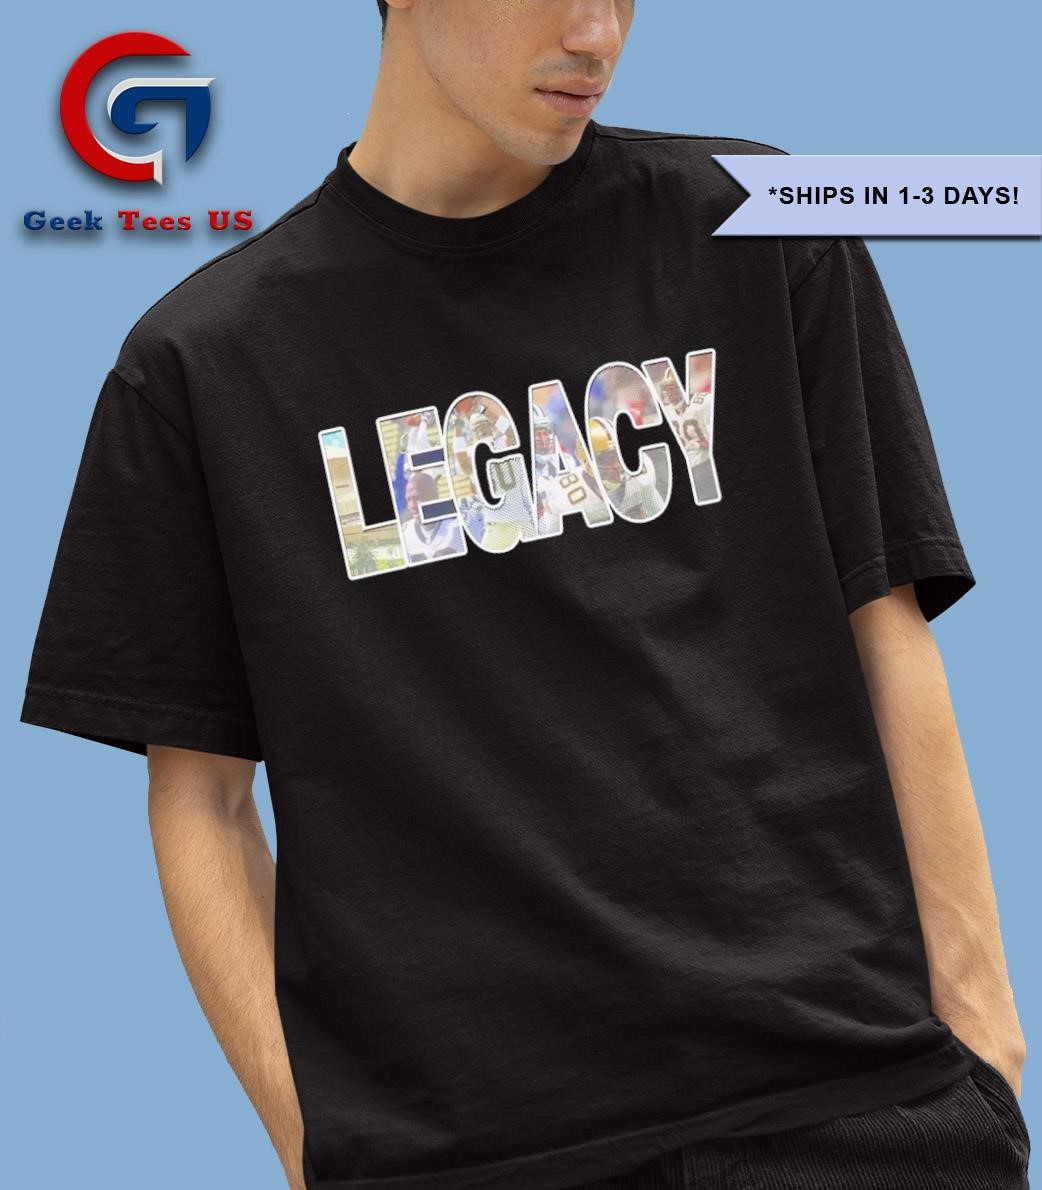 Legacy Raylen Wilson Georgia Bulldogs classic shirt
Buy this shirt:  geekteesus.com/product/legacy…
#shirt #trending #gift #geekteesus #geekshirt #RaylenWilson #Legacy #GeorgiaBulldogs #Bulldogs